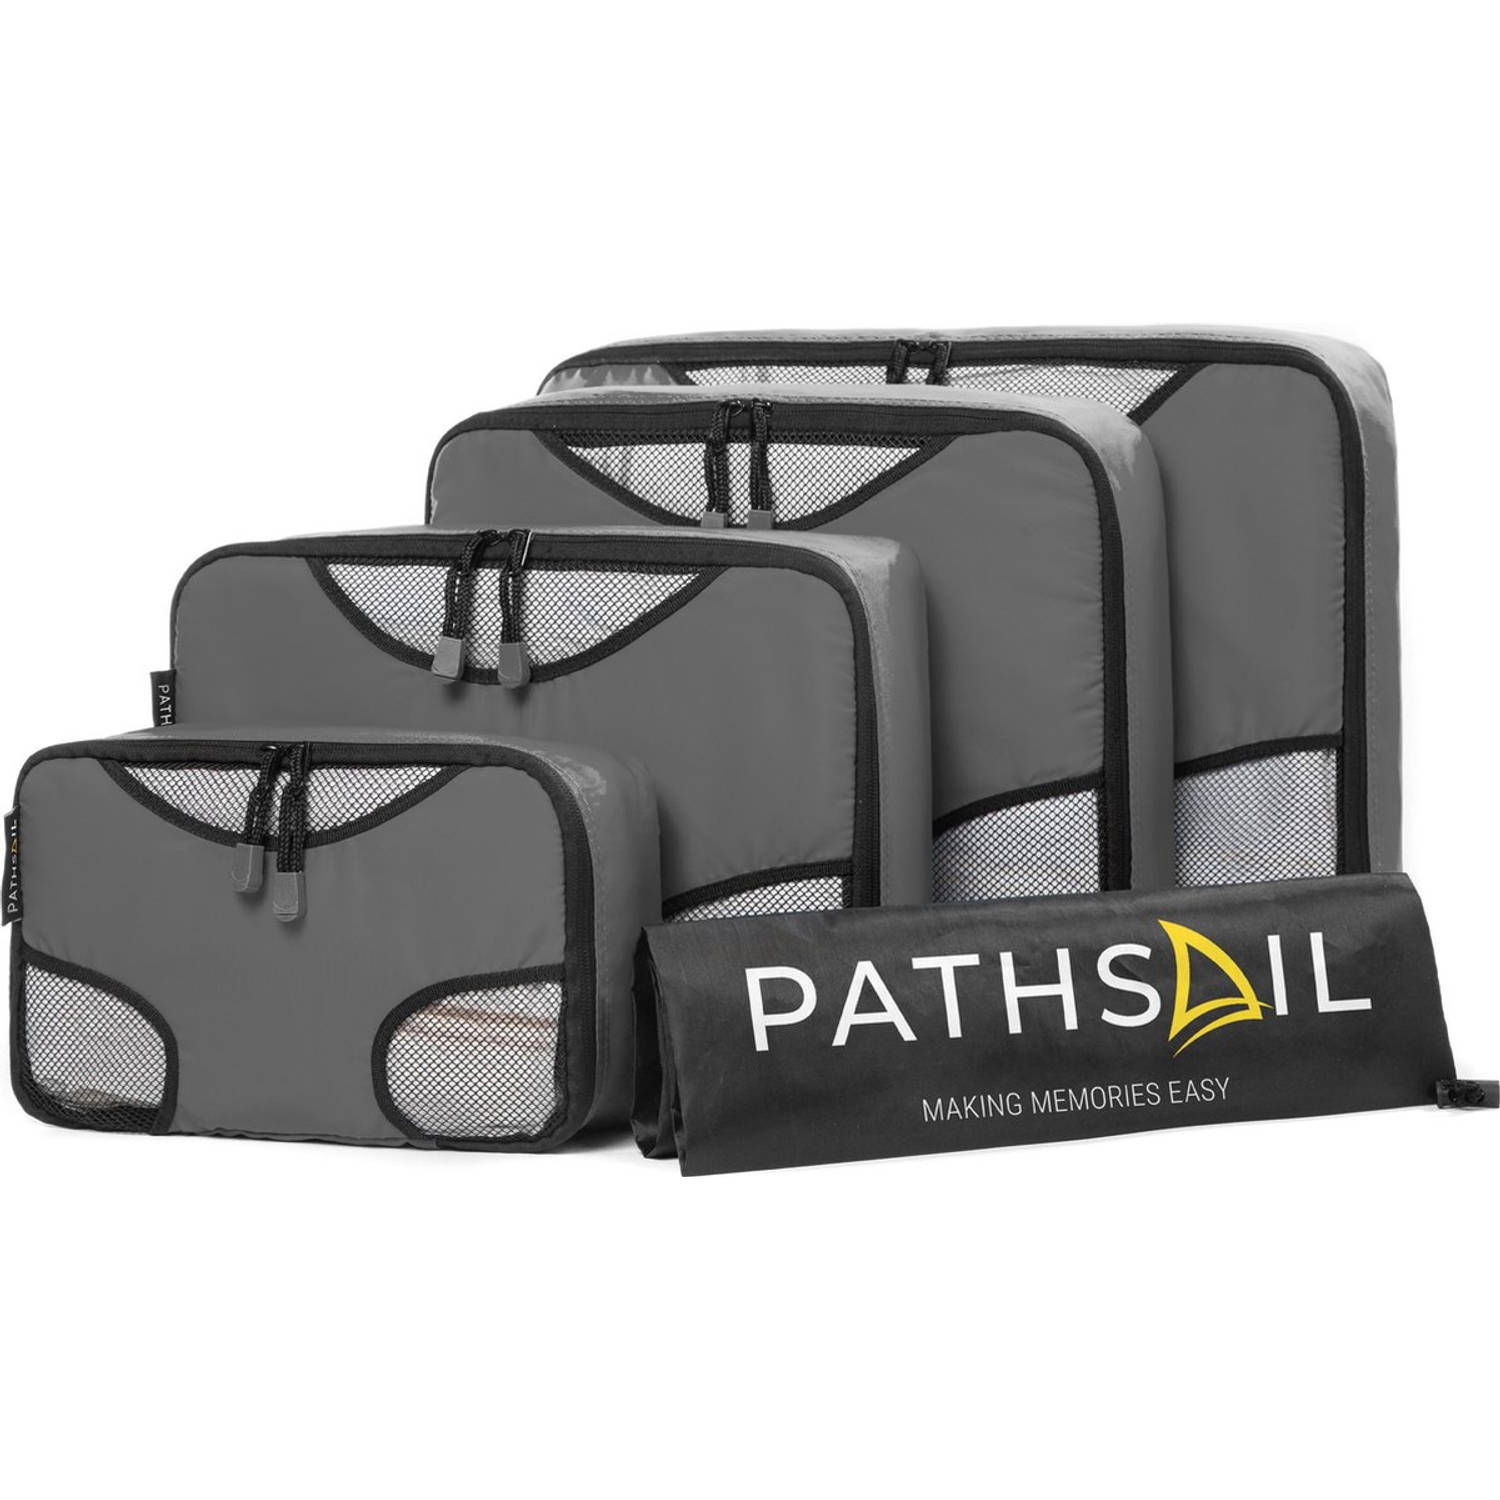 Pathsail - Packing Cube - PSA003 - Dark Grey